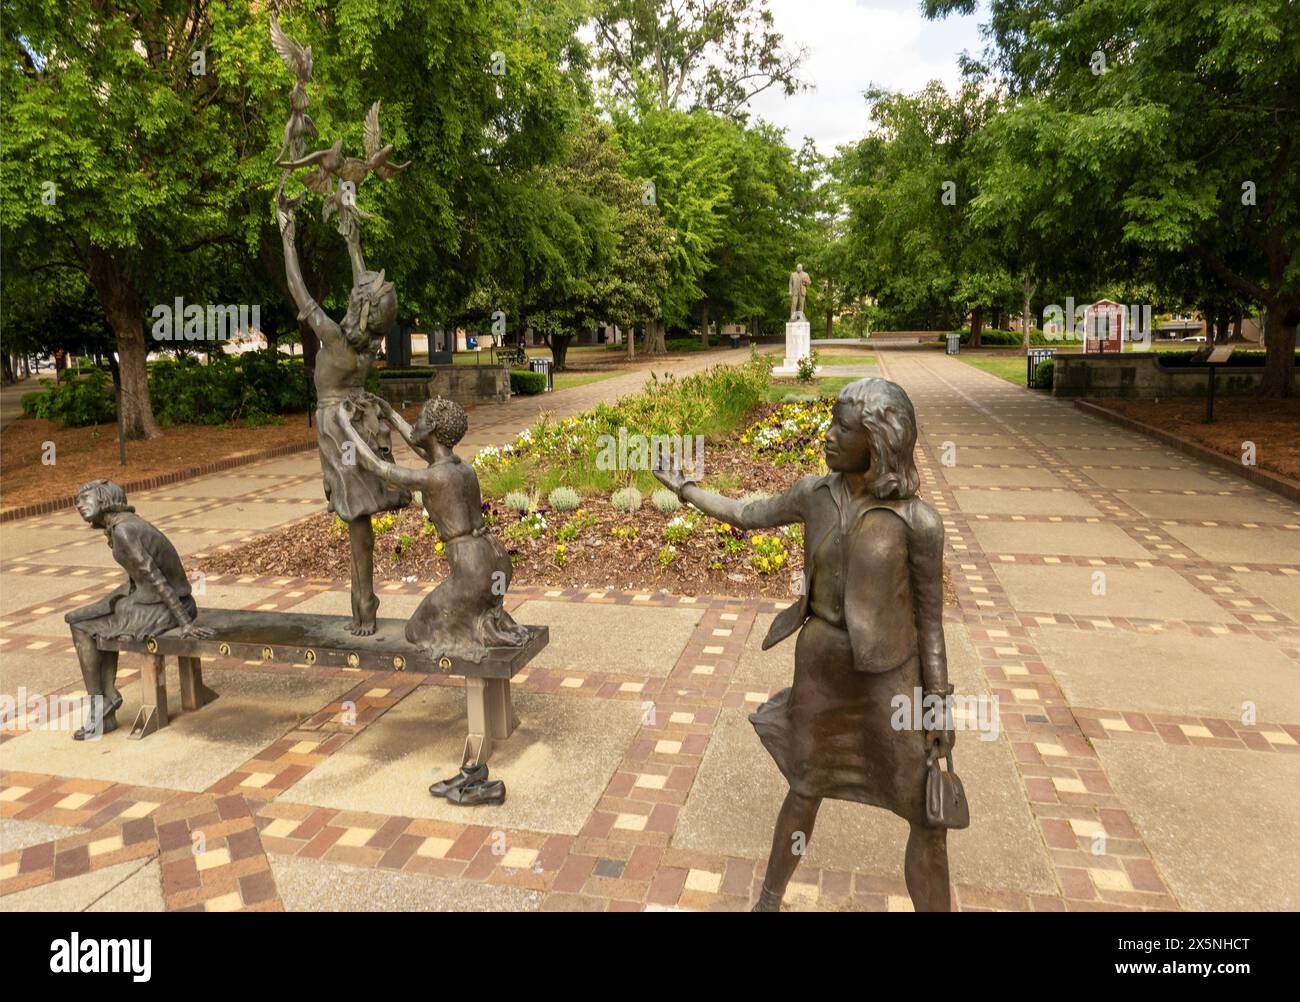 Statues and memorial in Kelly Ingram park in Birmingham Alabama Stock Photo